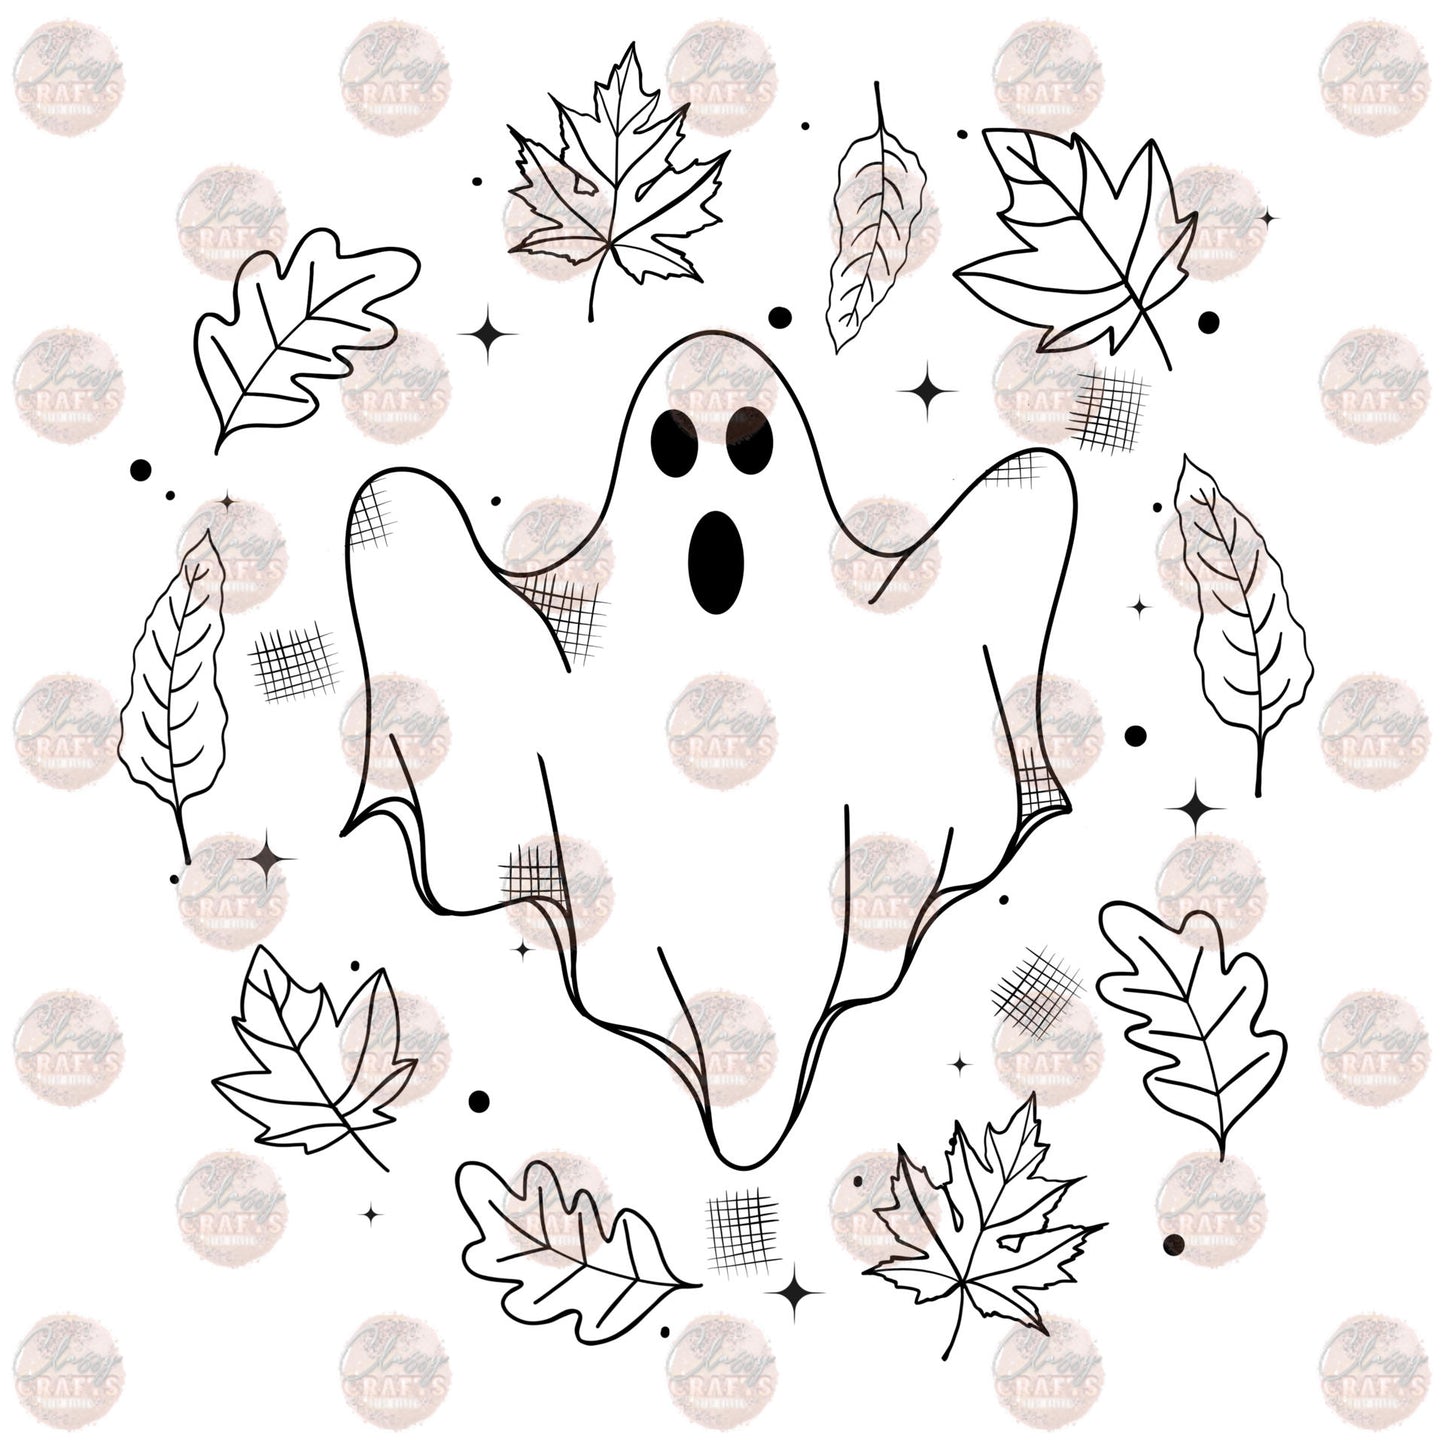 Ghost Leaves B&W Transfer